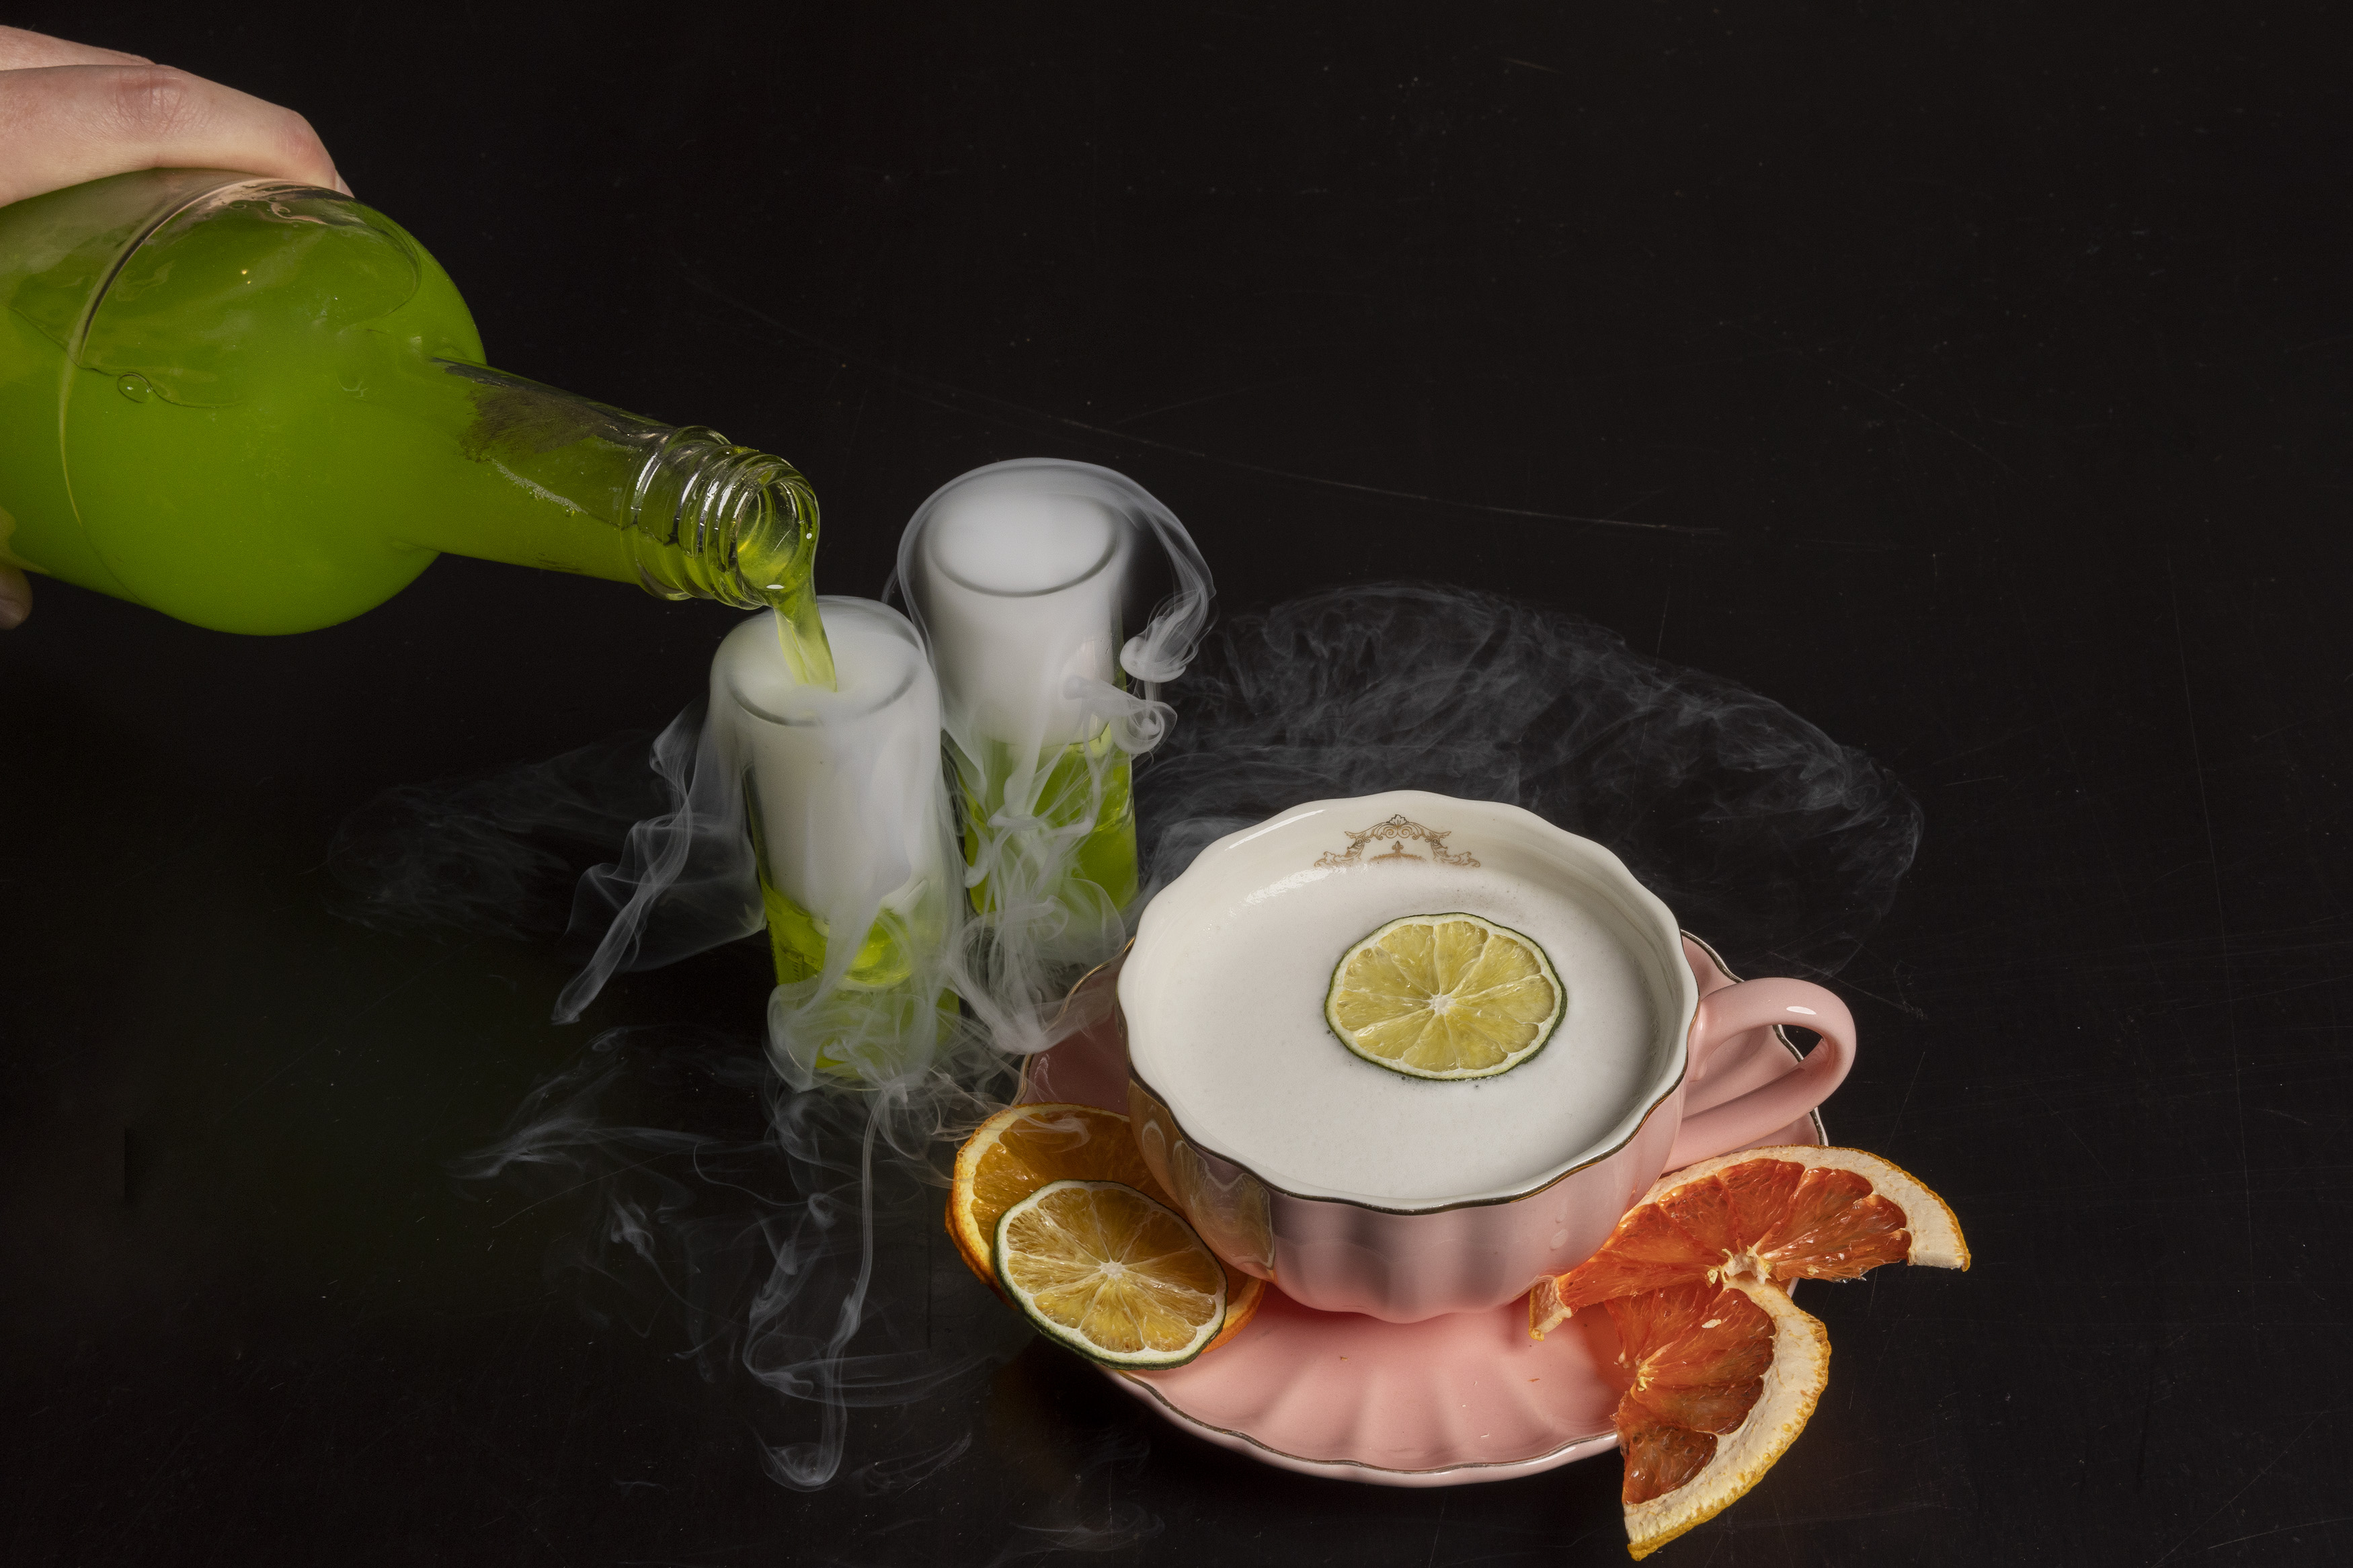 A hand pours green liquid into a smoking shot glass beside a pink teacup.